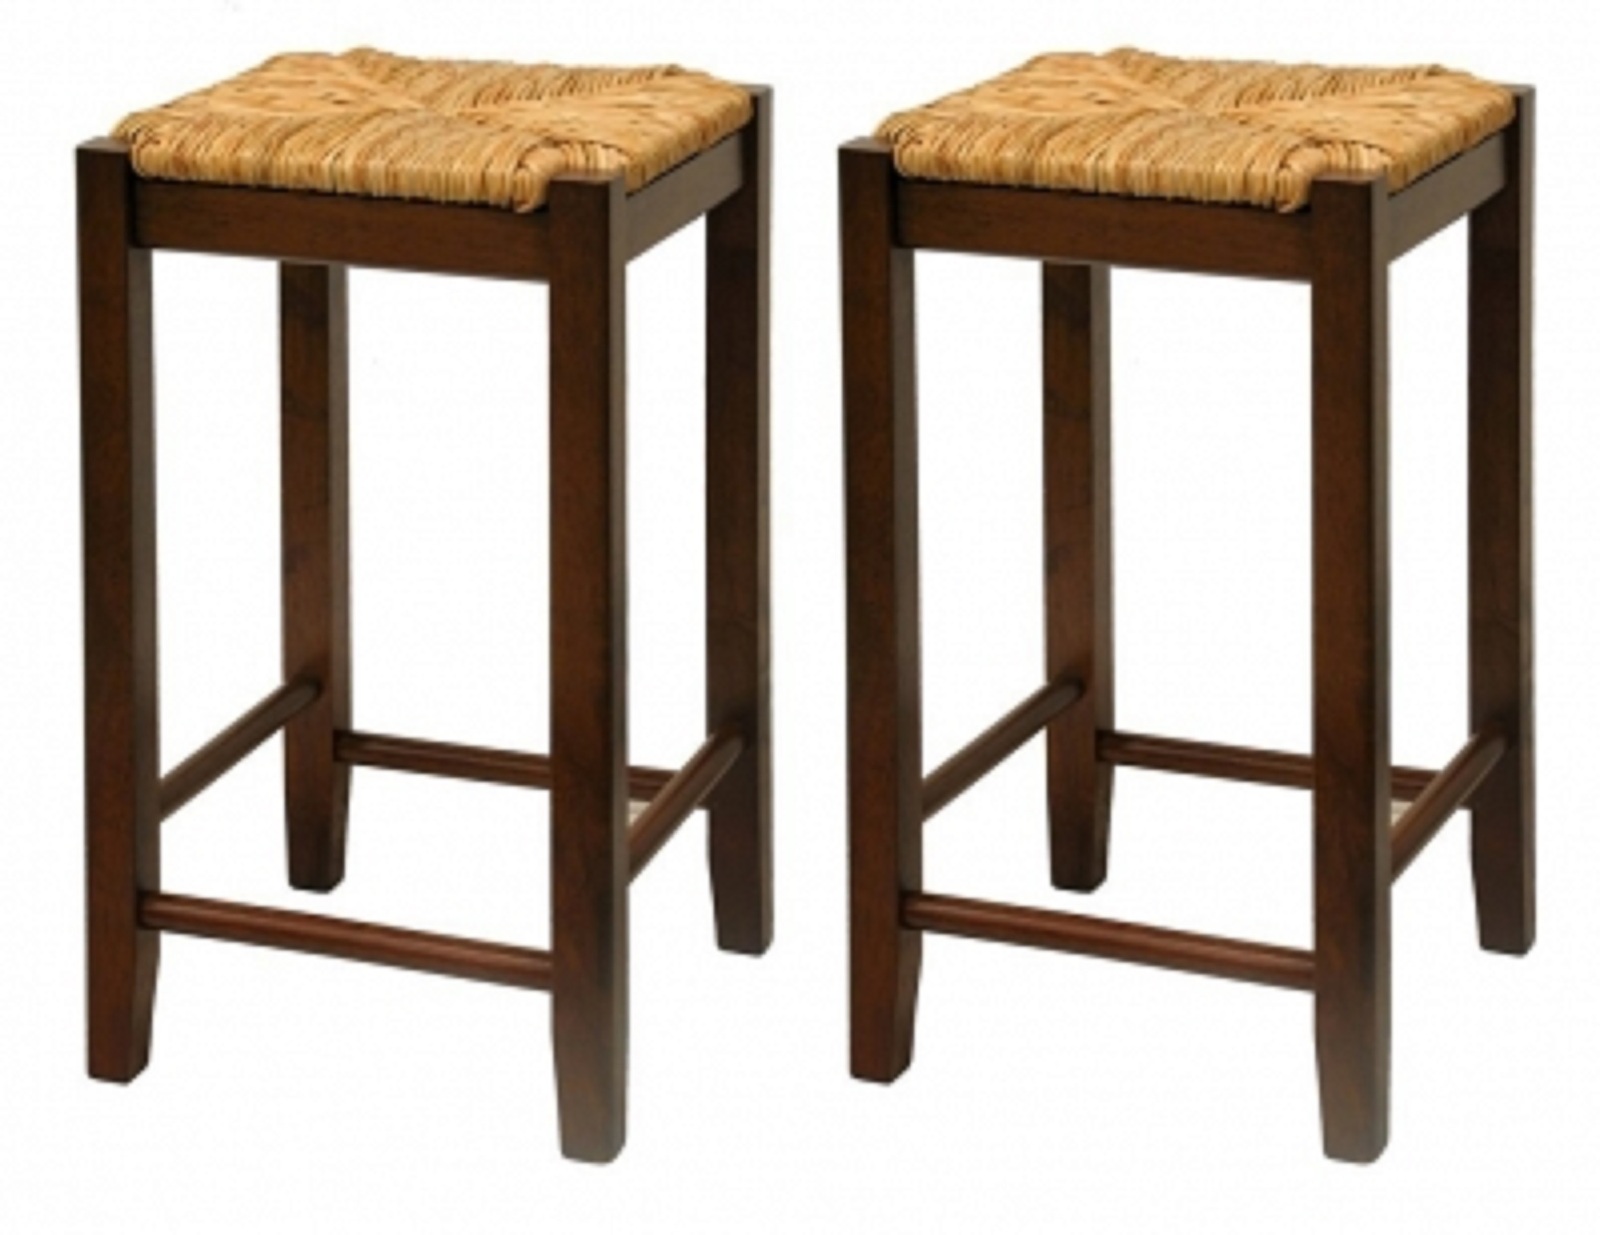 24 inch kitchen bar stools